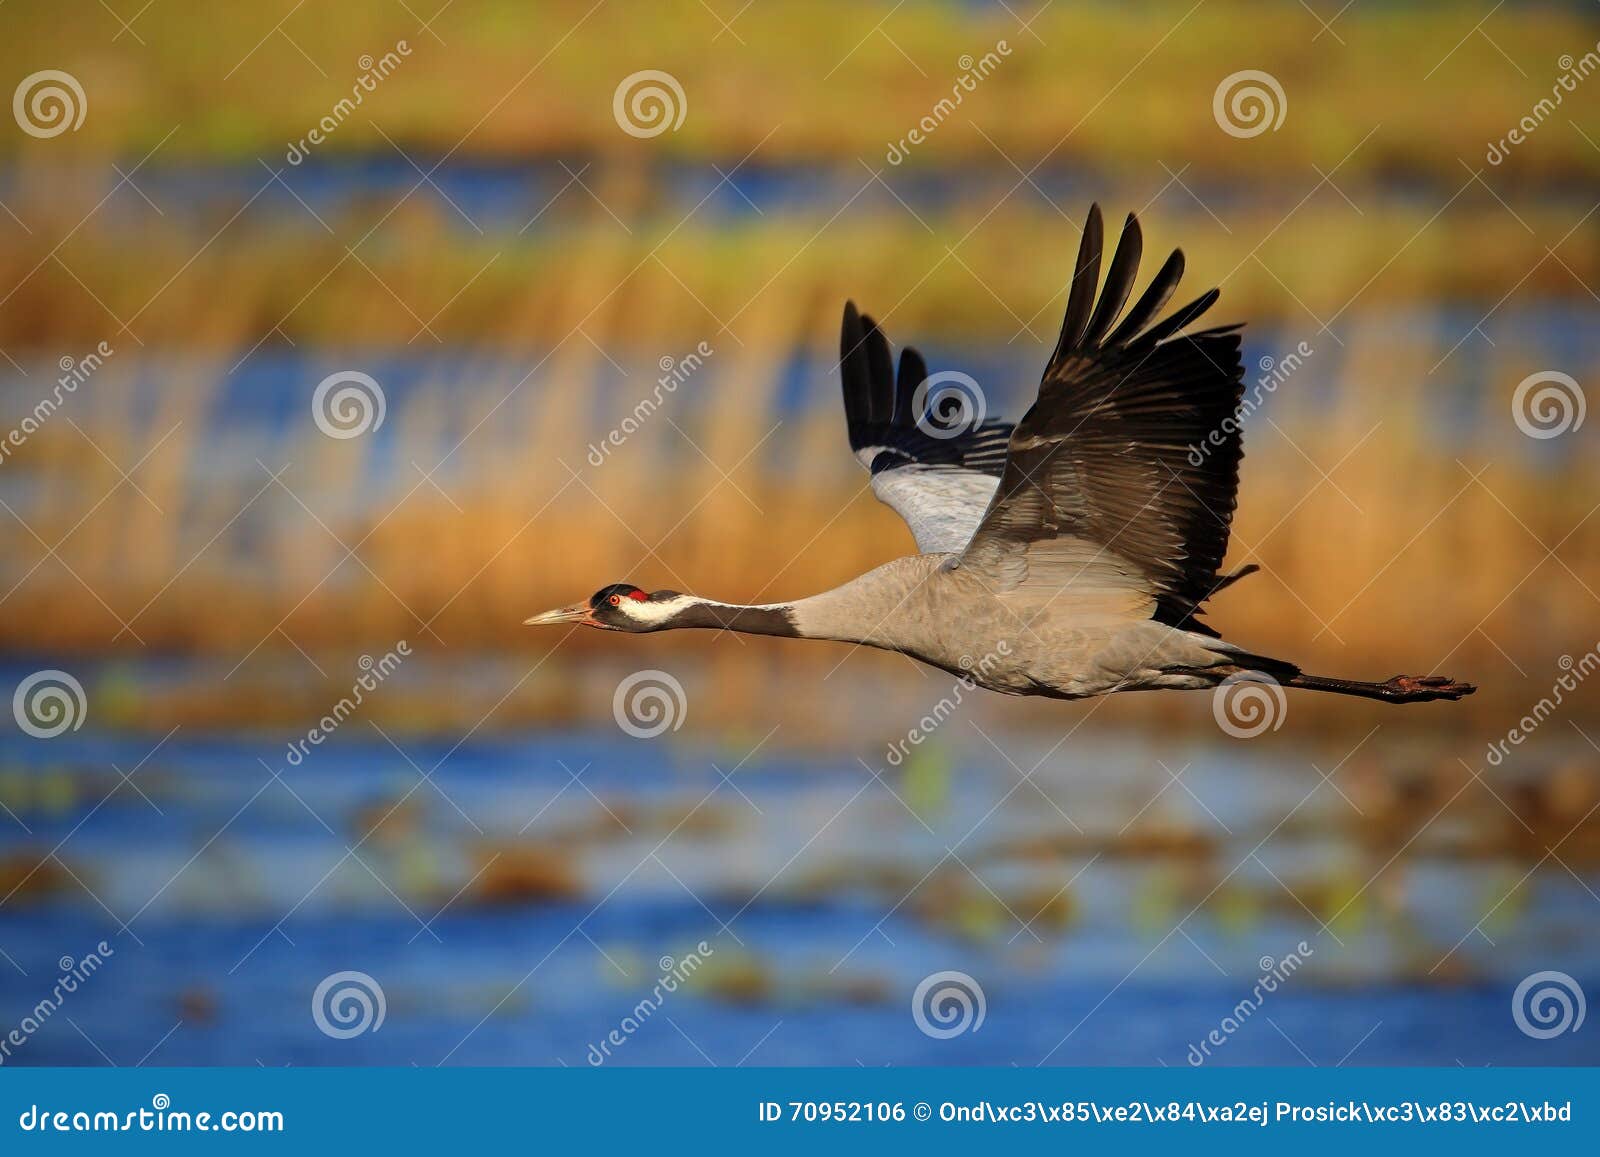 common crane, grus grus, flying big bird in the nature habitat, germany